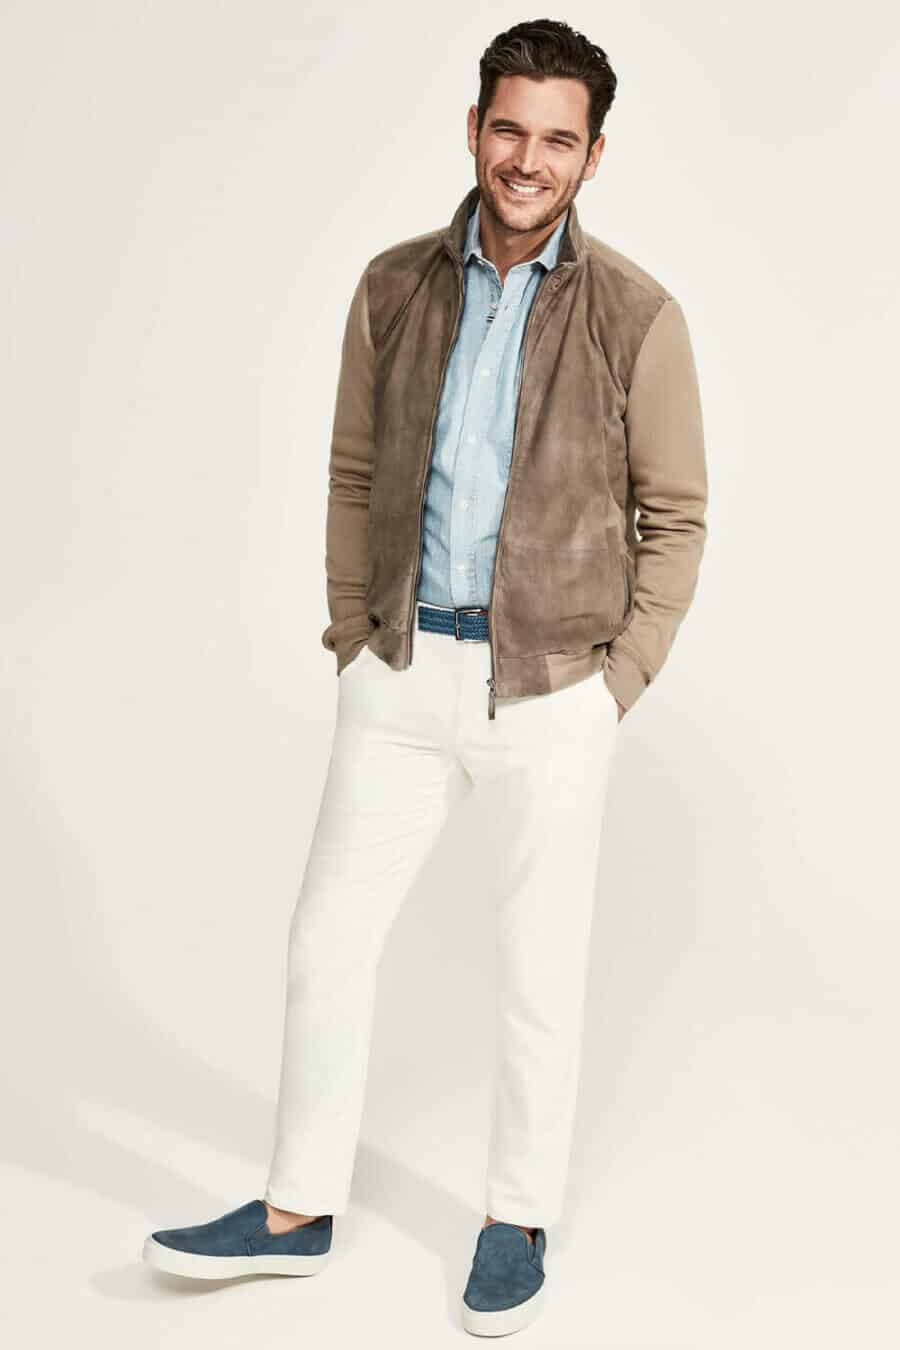 Spring/Summer double denim outfit for men - white jeans, light blue shirt